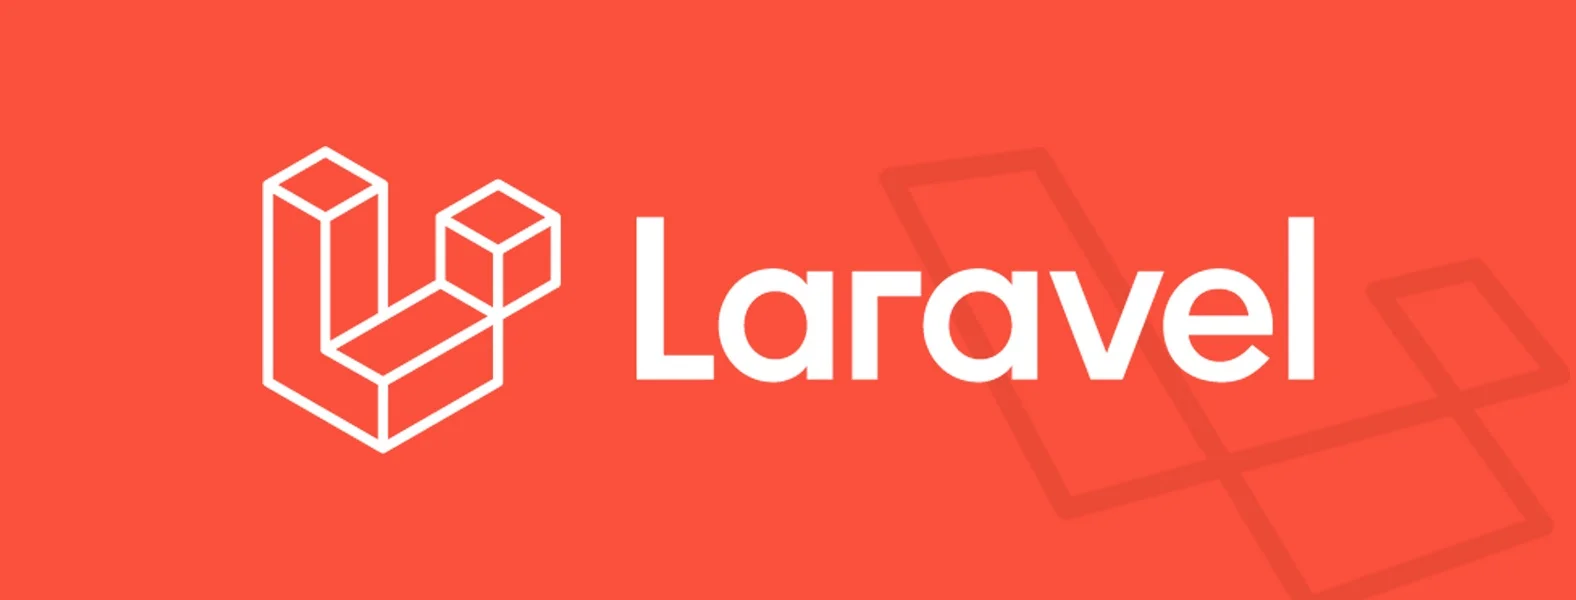 Follow Laravel Naming conventions - Laravel Best Practices